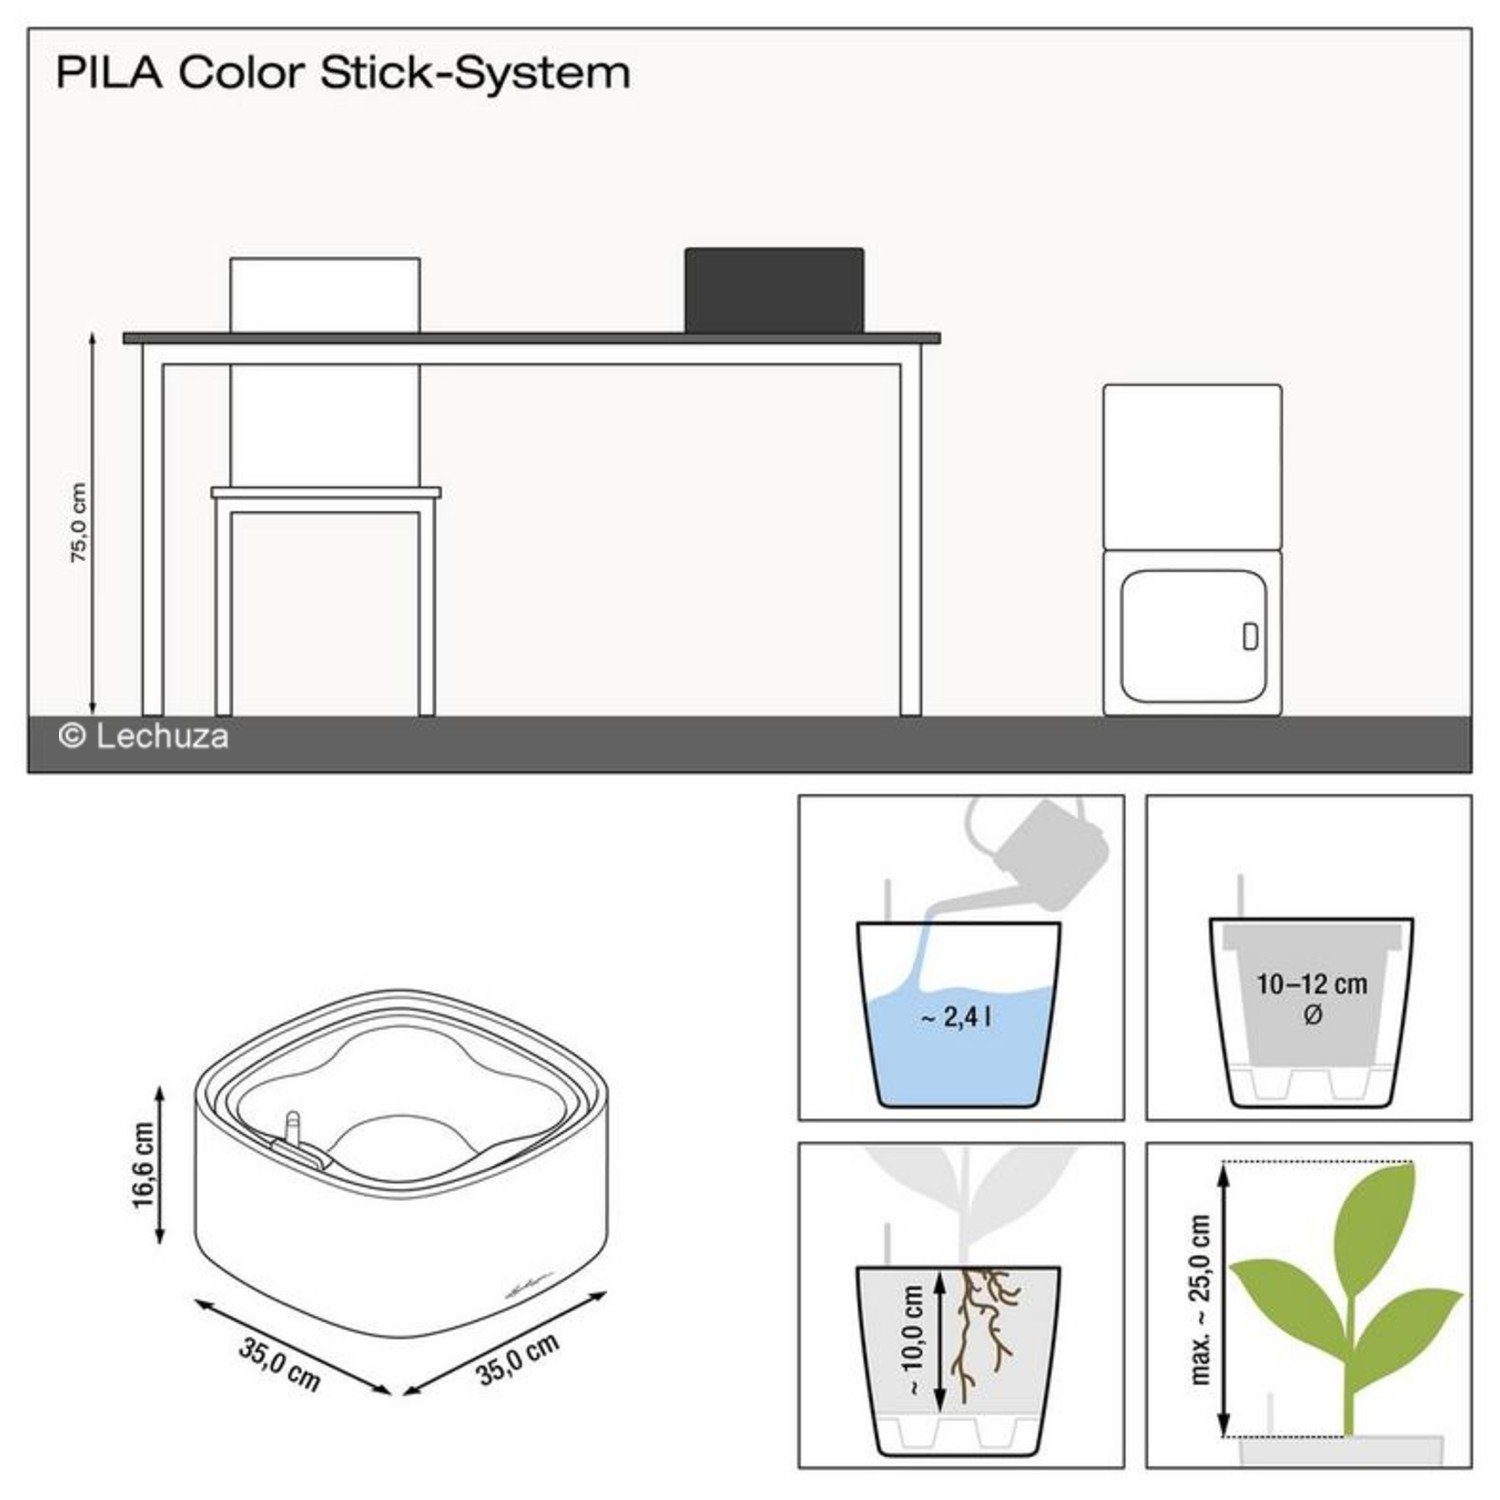 Lechuza® Pflanzkübel Pflanztopf Stick-System Color (Komplettset) korallrot Pila 15948